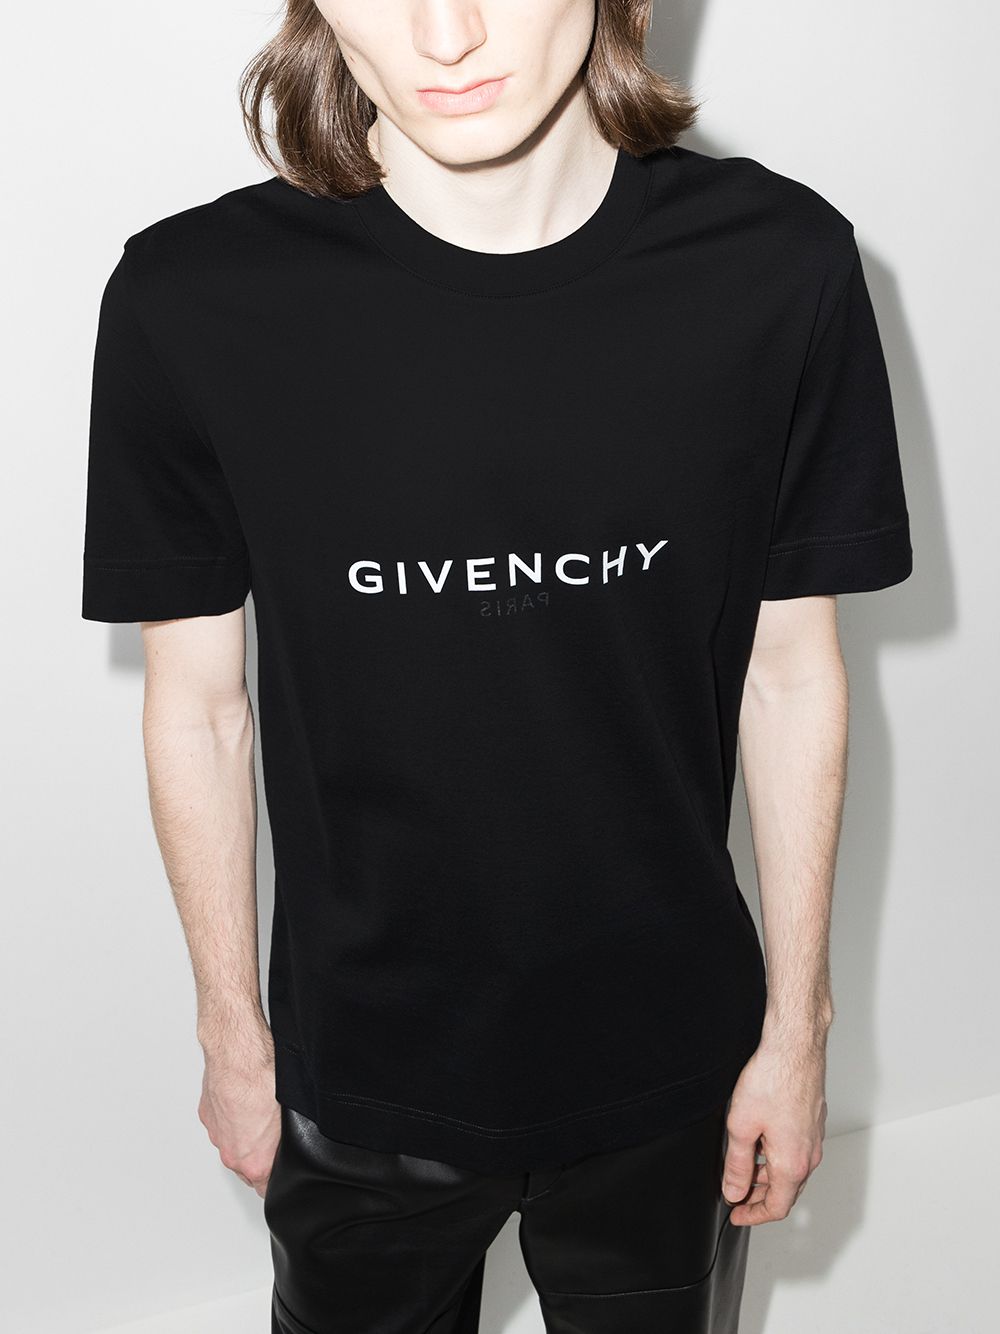 Givenchy T-Shirt - Loschi Boutique